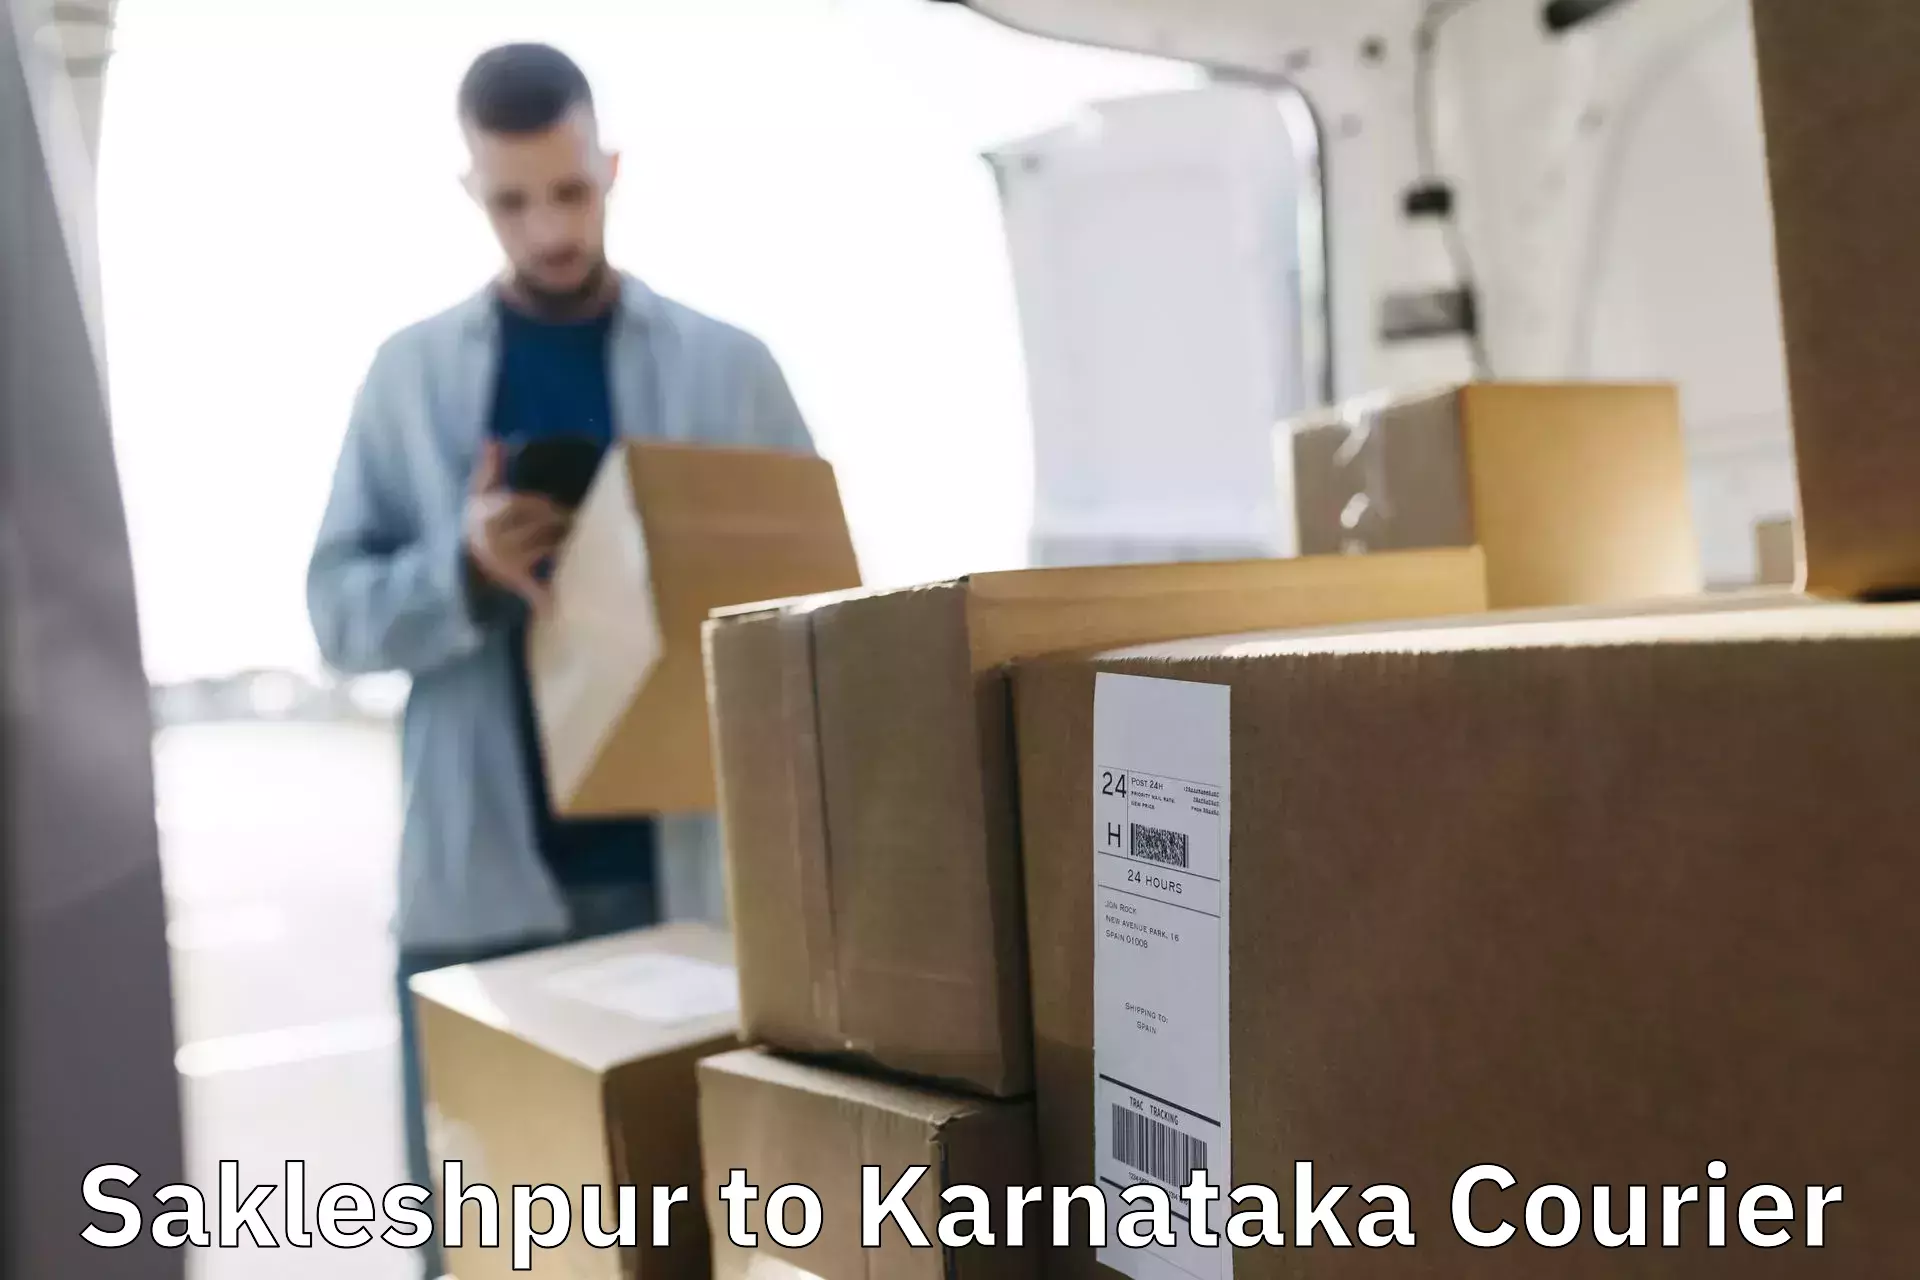 Global logistics network Sakleshpur to Karnataka